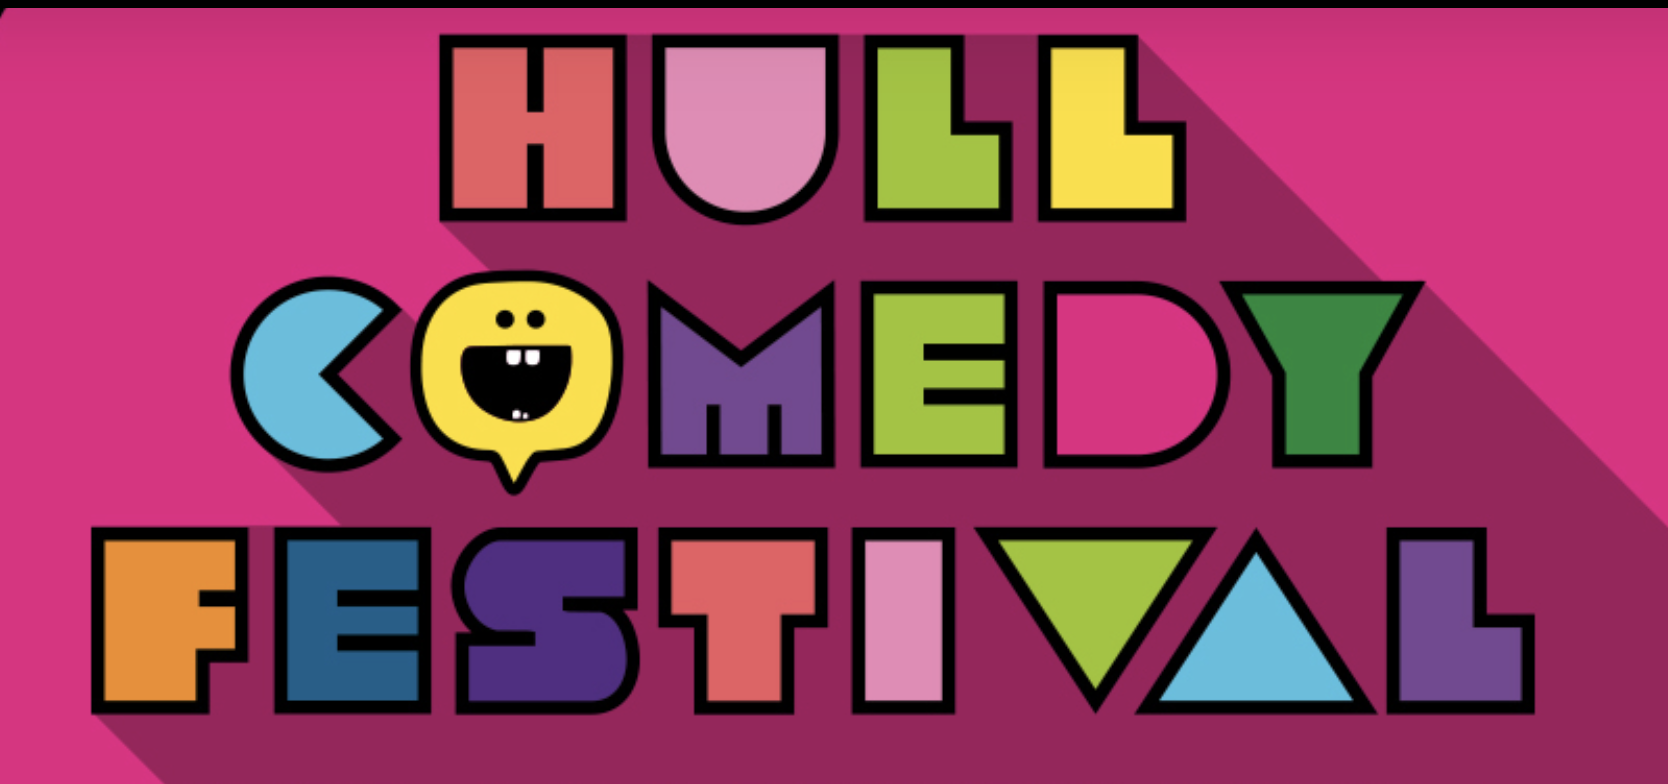 hull comedy festival